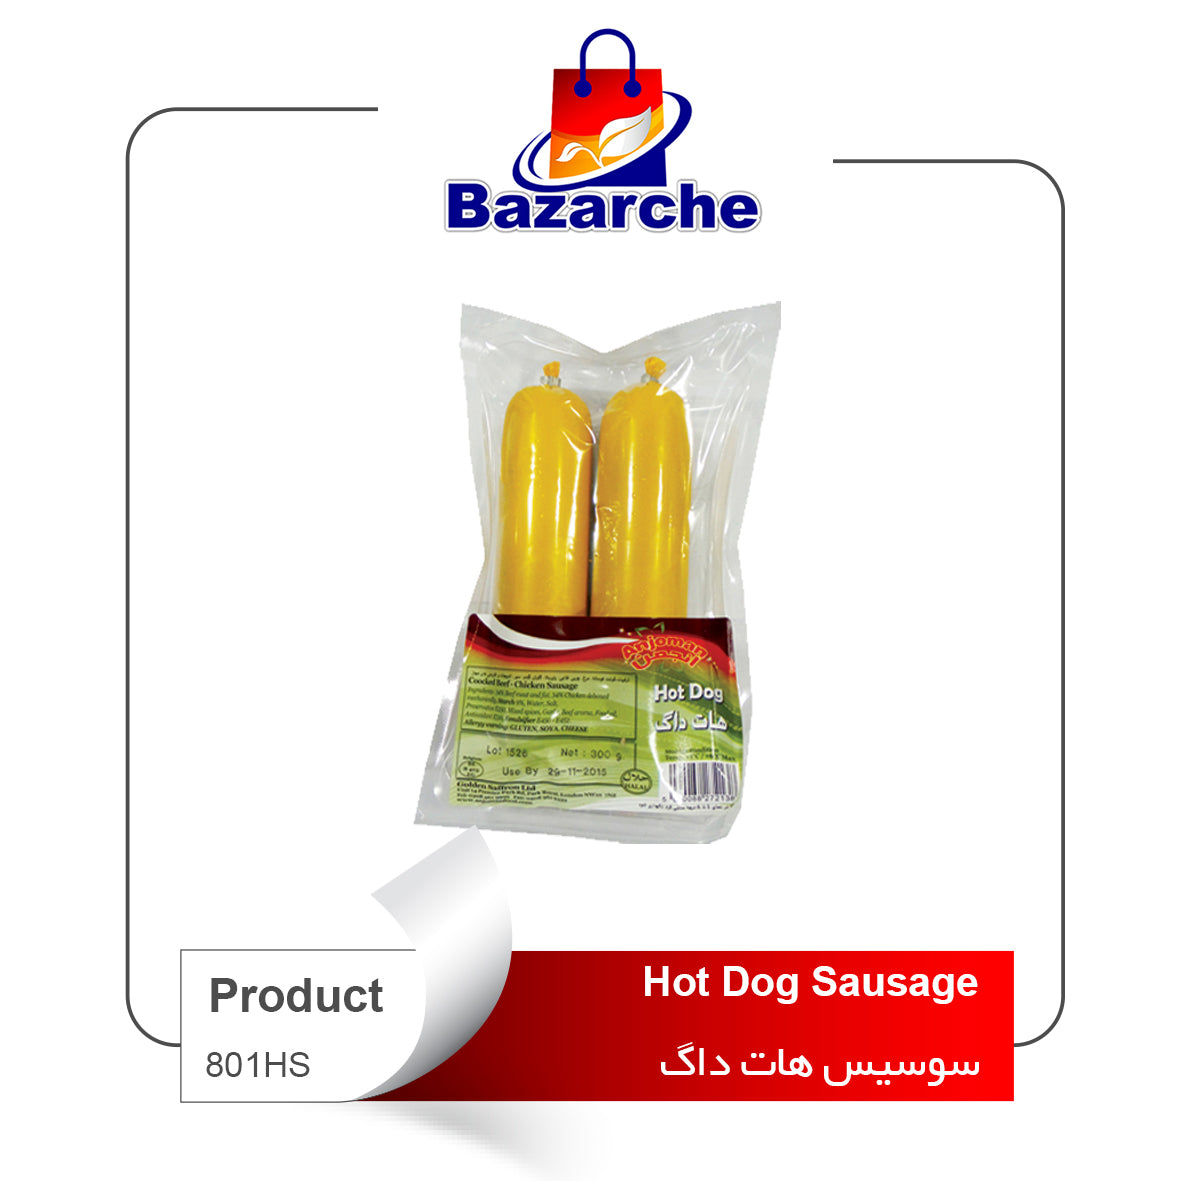 Hot Dog Sausage(هات داگ)